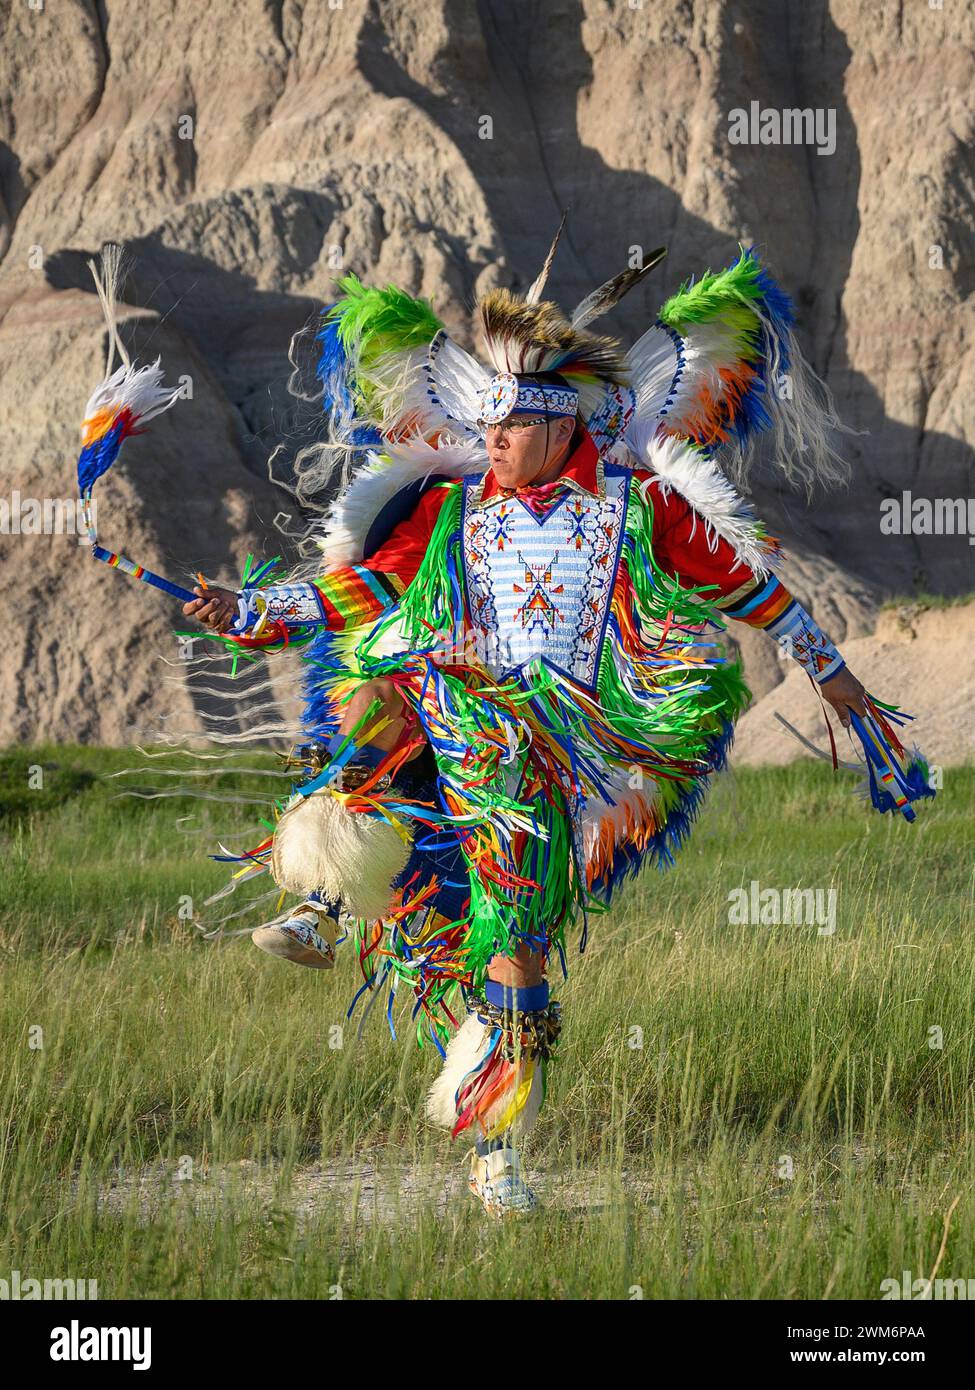 Geremiah Holy Bull spielt einen Tanz im Badlands National Park, South Dakota. Stockfoto